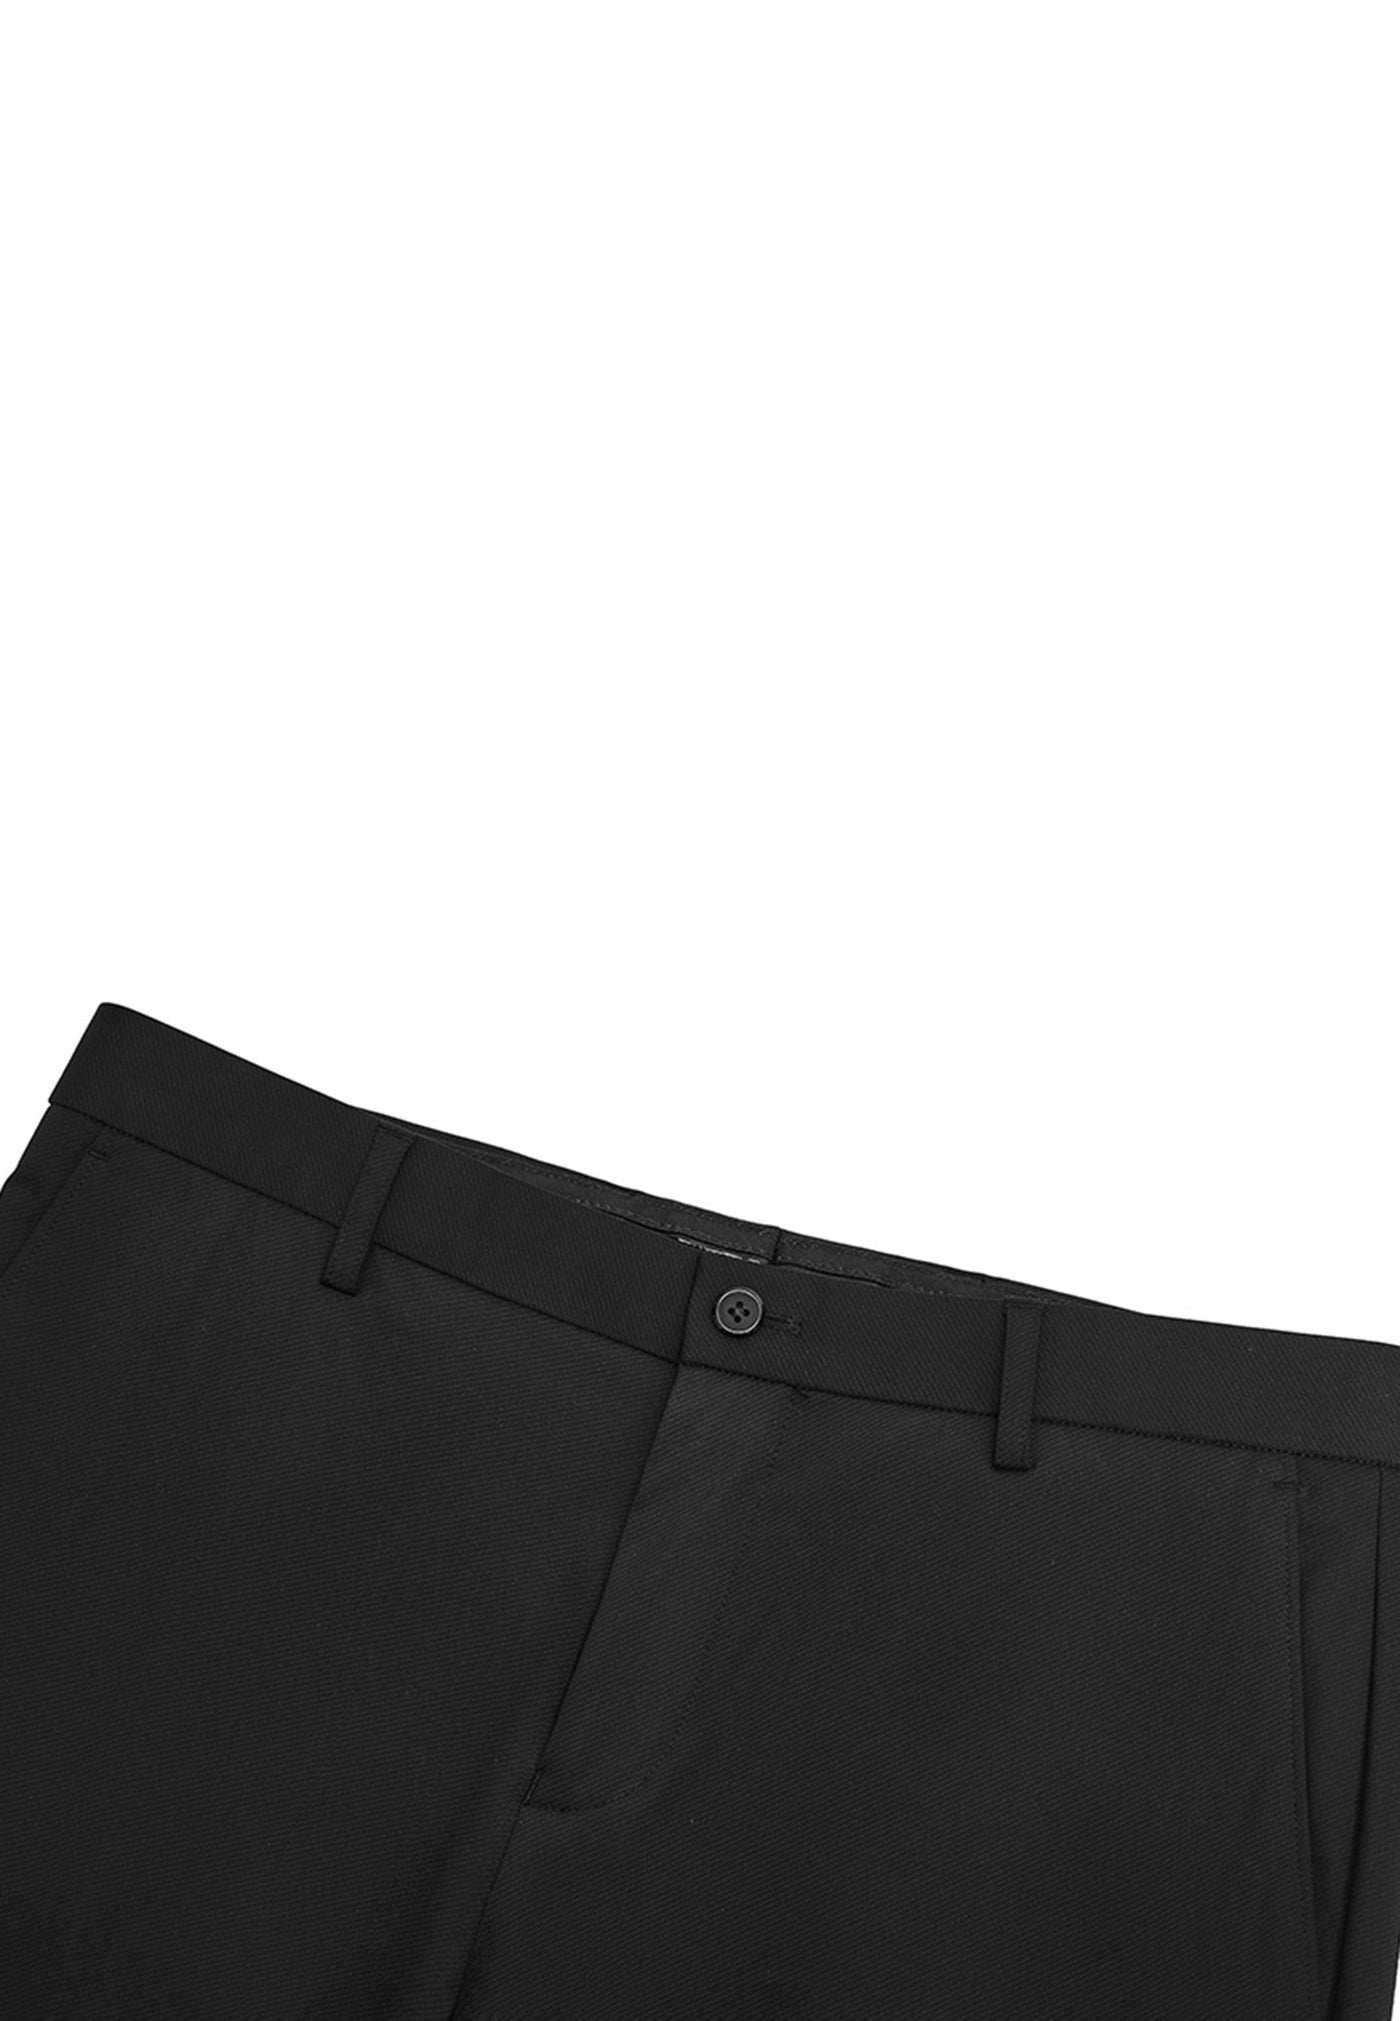 Men Clothing Multi-Way Ultra Stretch Formal Pants Regular Fit